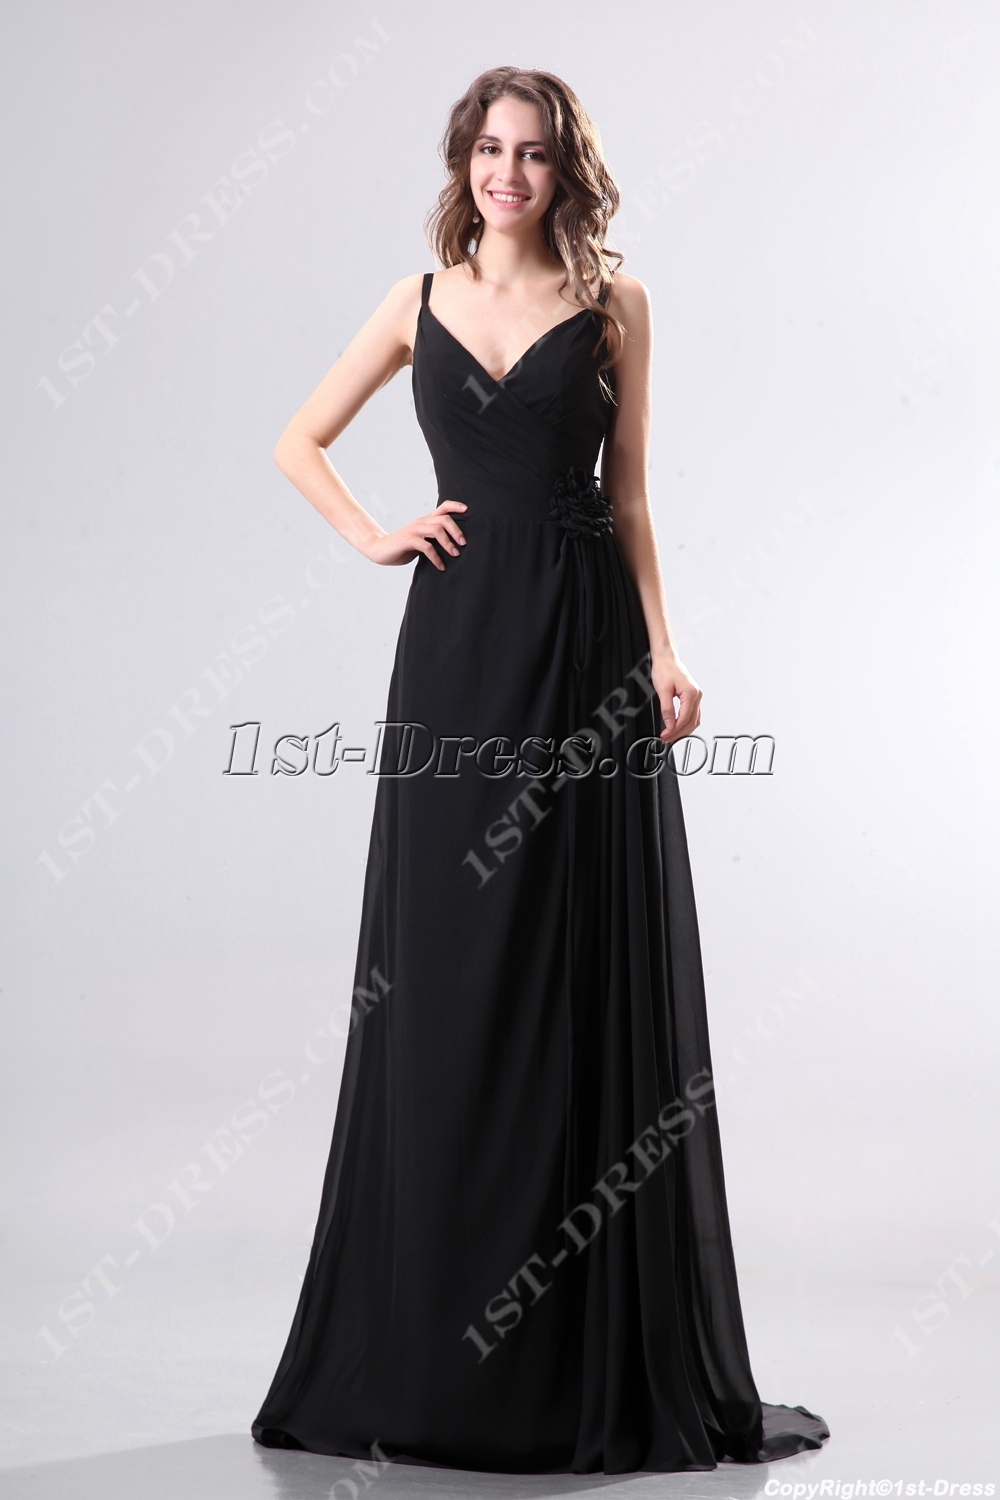 images/201311/big/Spaghetti-Straps-Black-Chiffon-Prom-Dresses-for-Large-Size-3487-b-1-1384173630.jpg